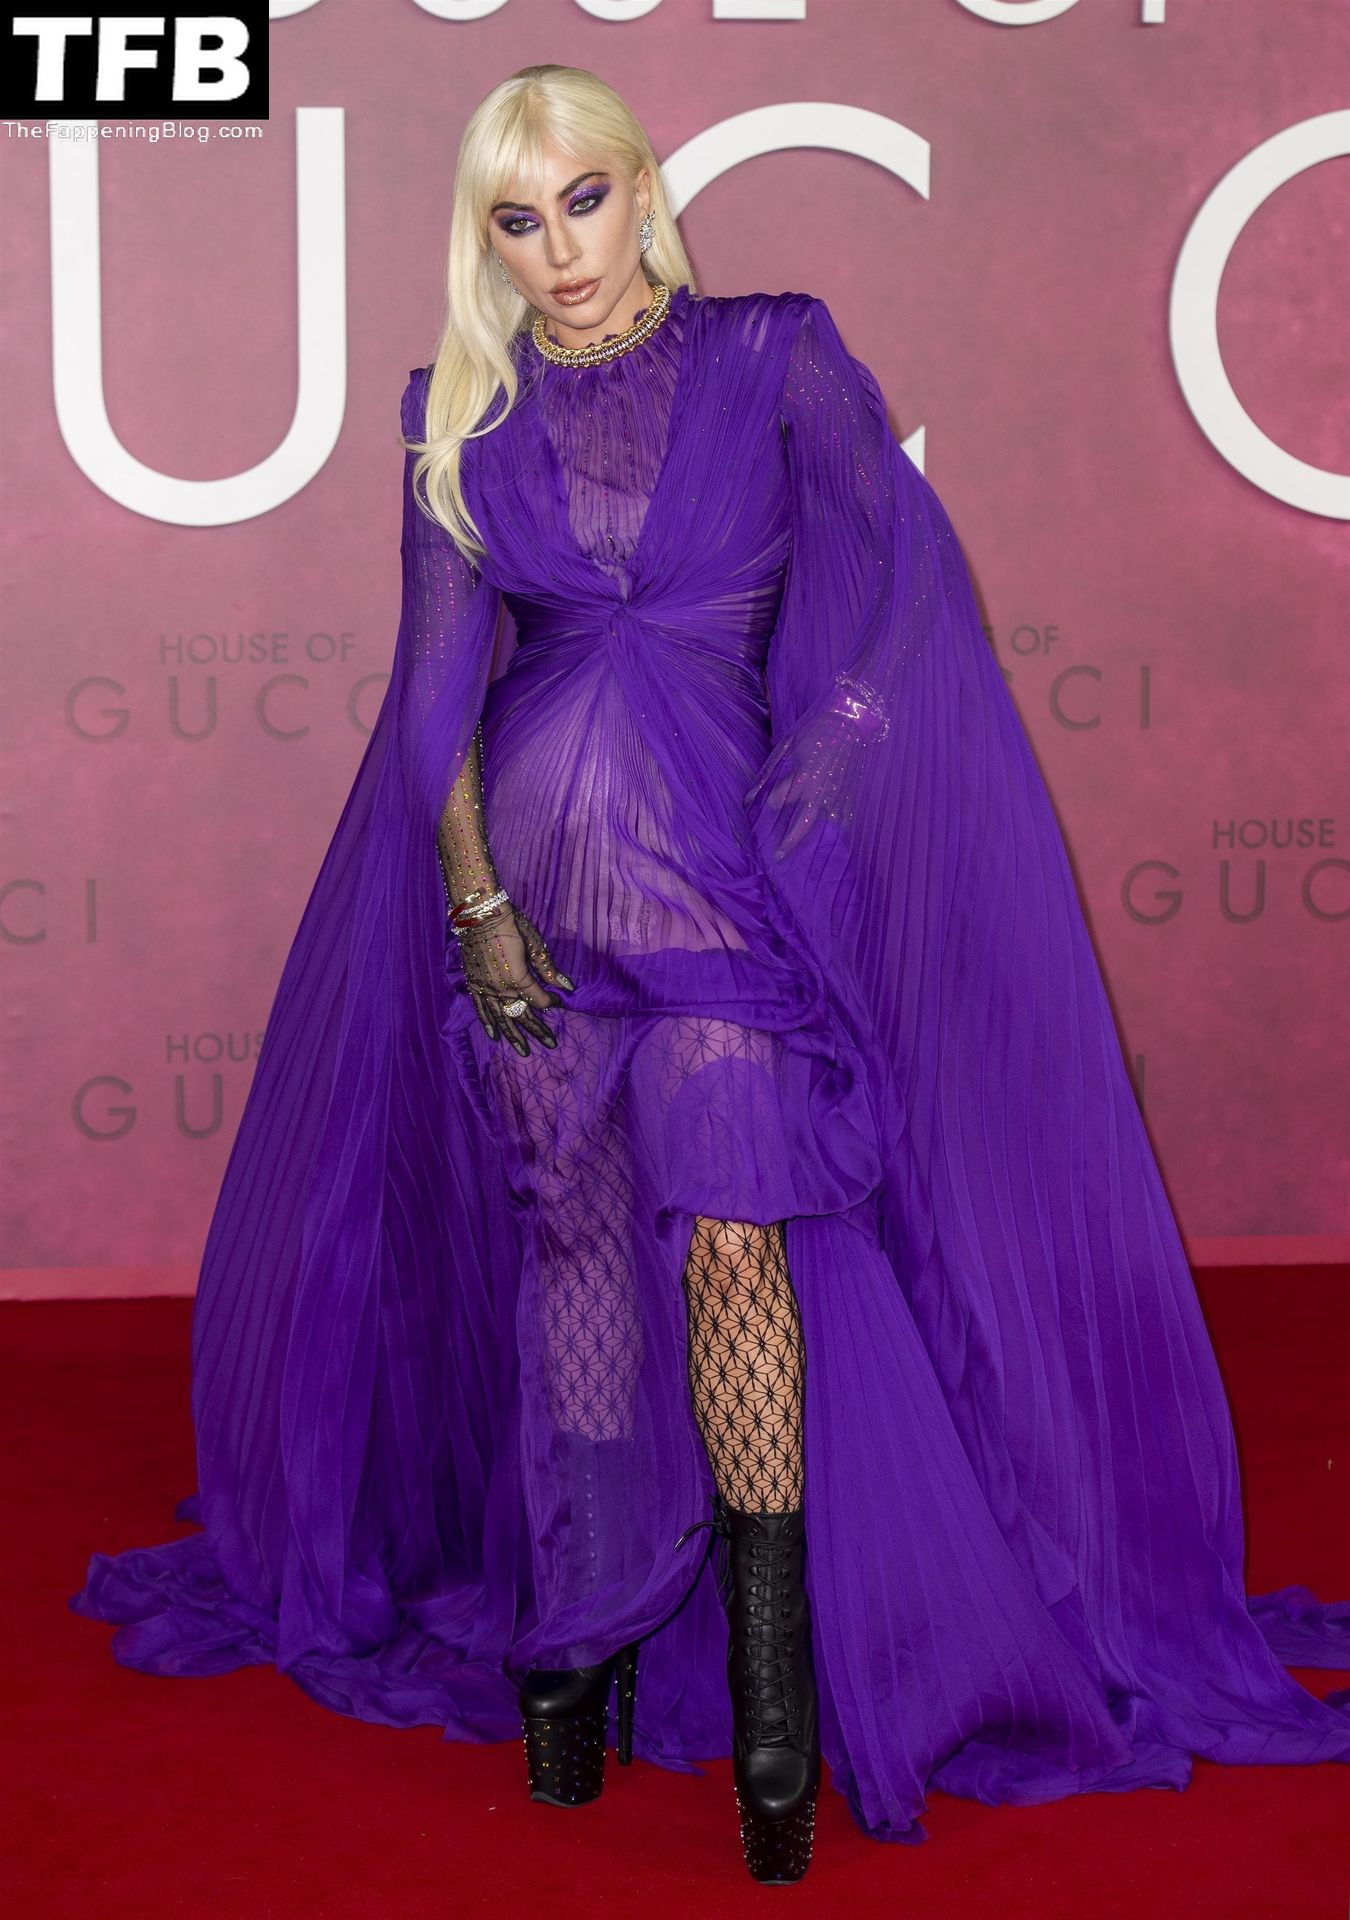 Lady-Gaga-Sexy-The-Fappening-Blog-37.jpg